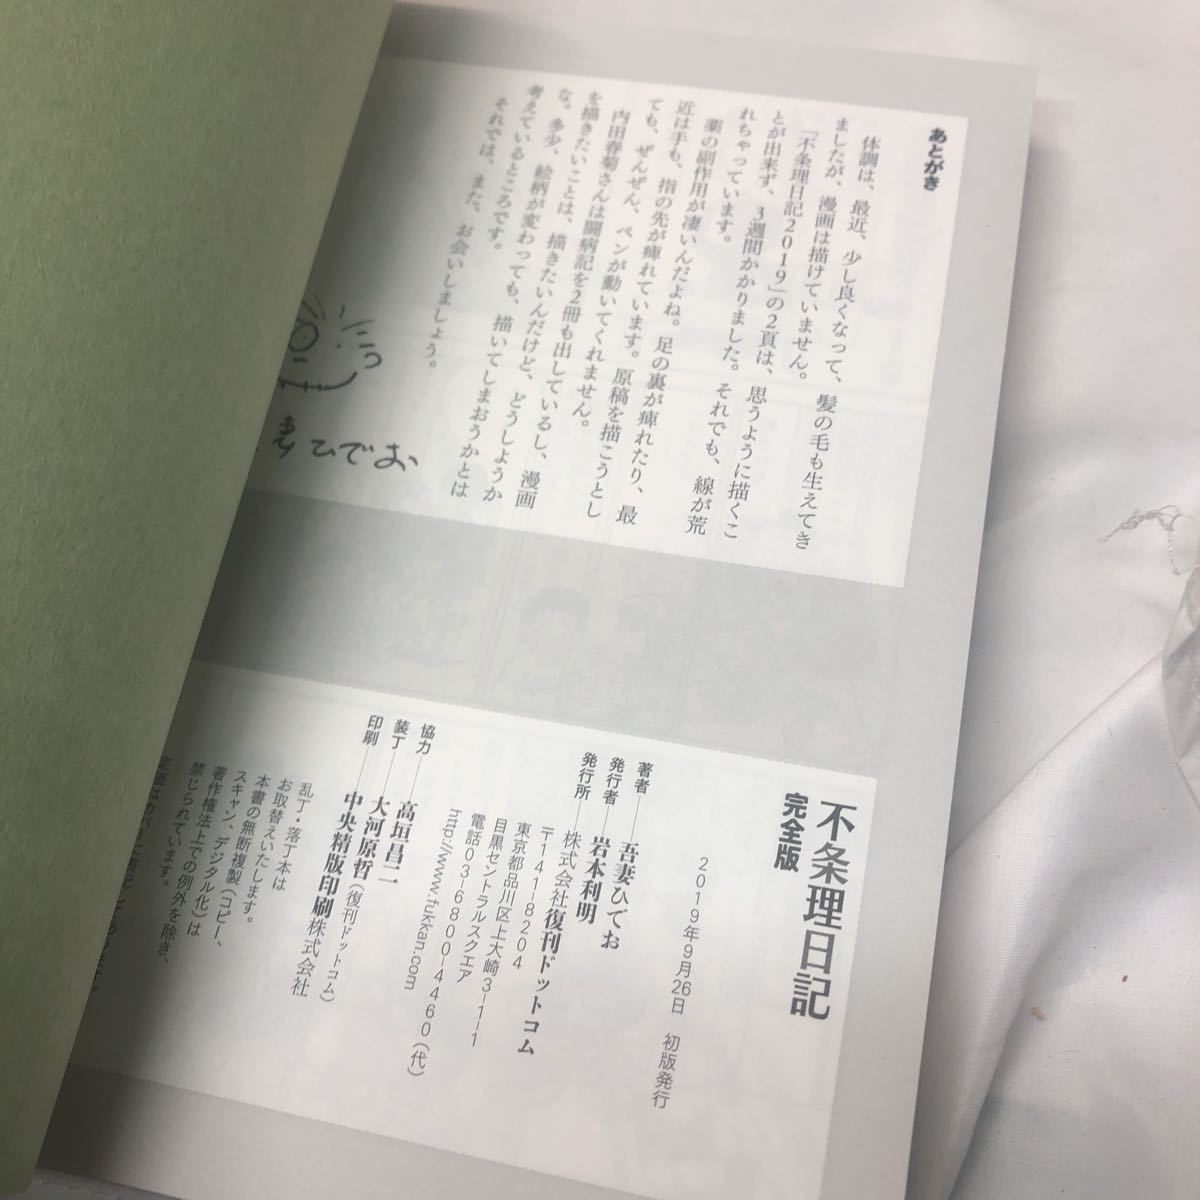 A62 不条理日記 完全版 コミック 2019/9/20 吾妻 ひでお (著)復刊ドットコム_画像5